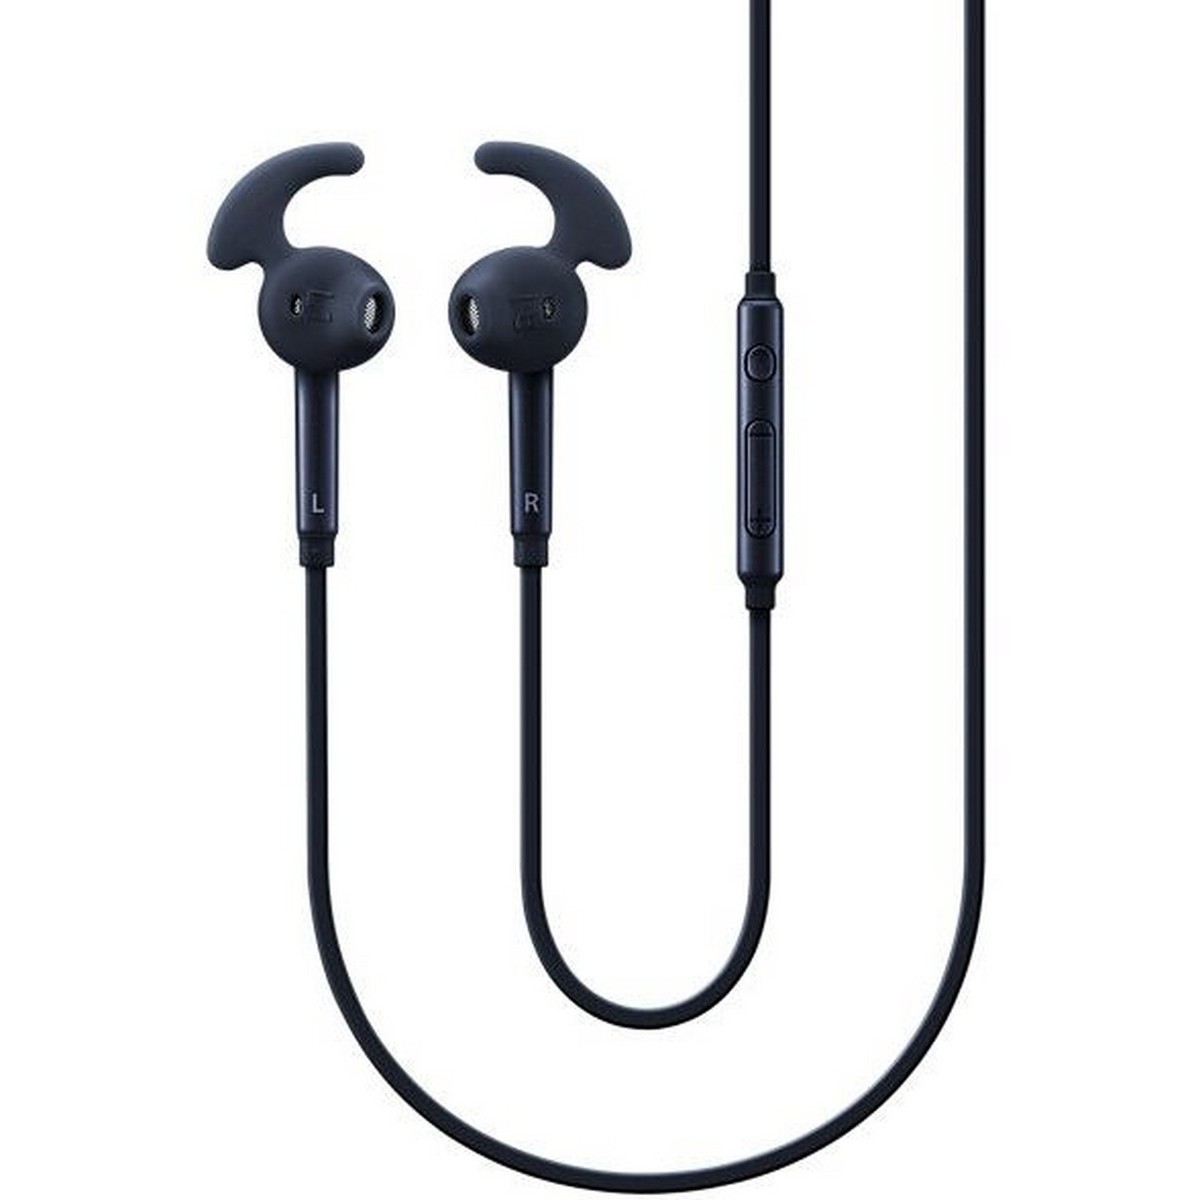 Samsung Stereo Headphones In-Ear Fit EG920 Black